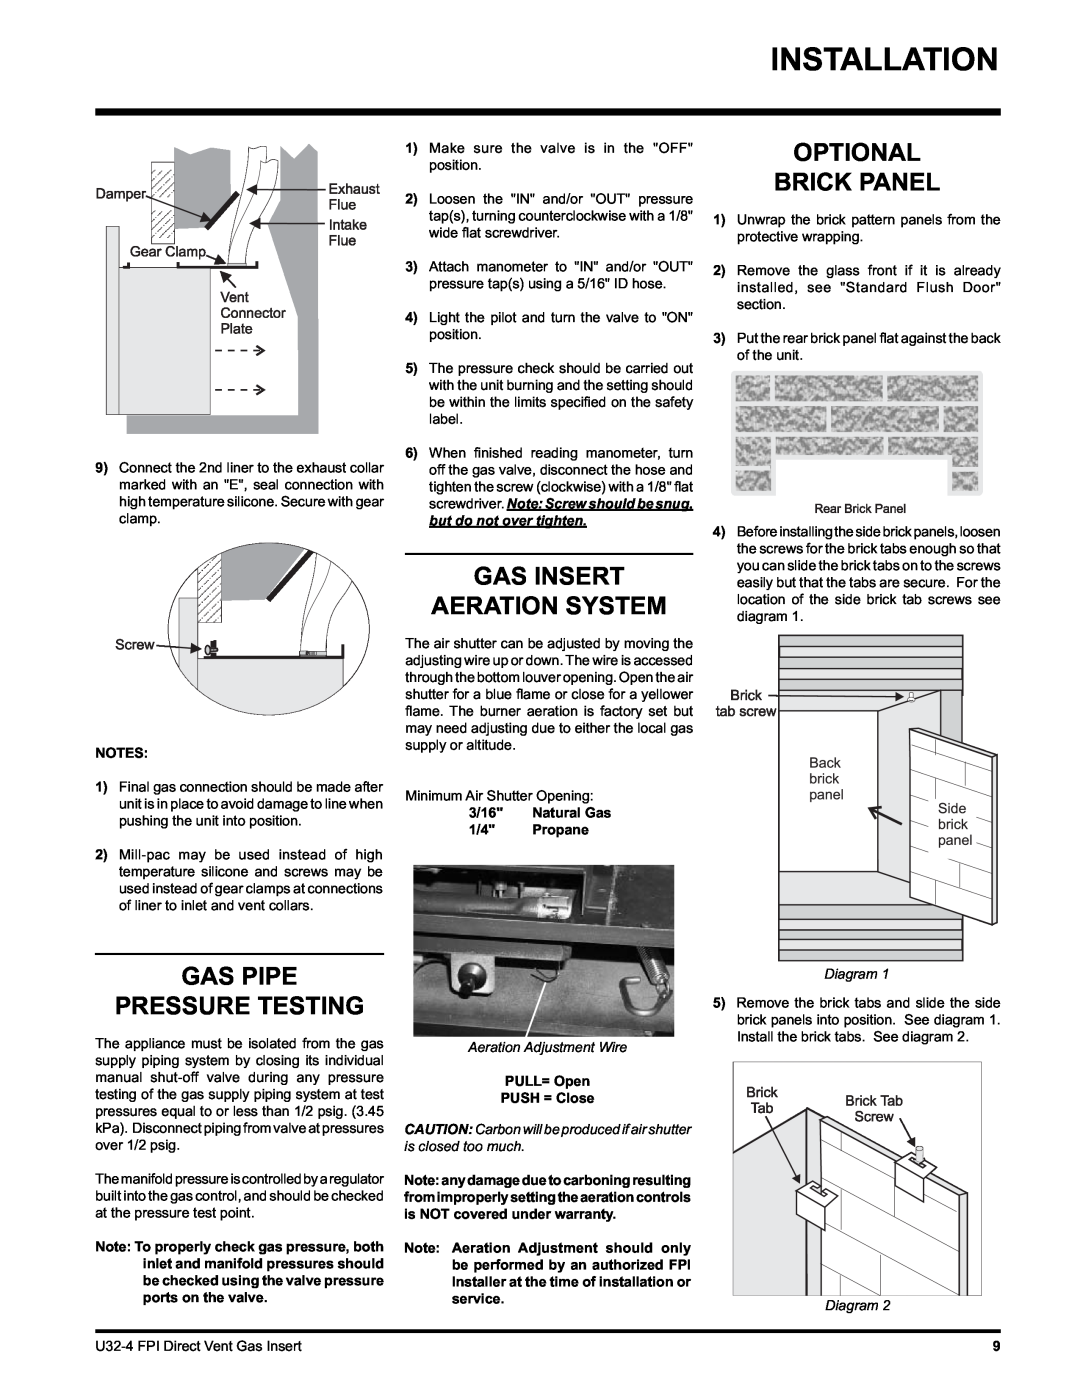 Regency U32-NG4 Gas Insert Aeration System, Optional Brick Panel, Gas Pipe Pressure Testing, 3/16 Natural Gas 1/4 Propane 